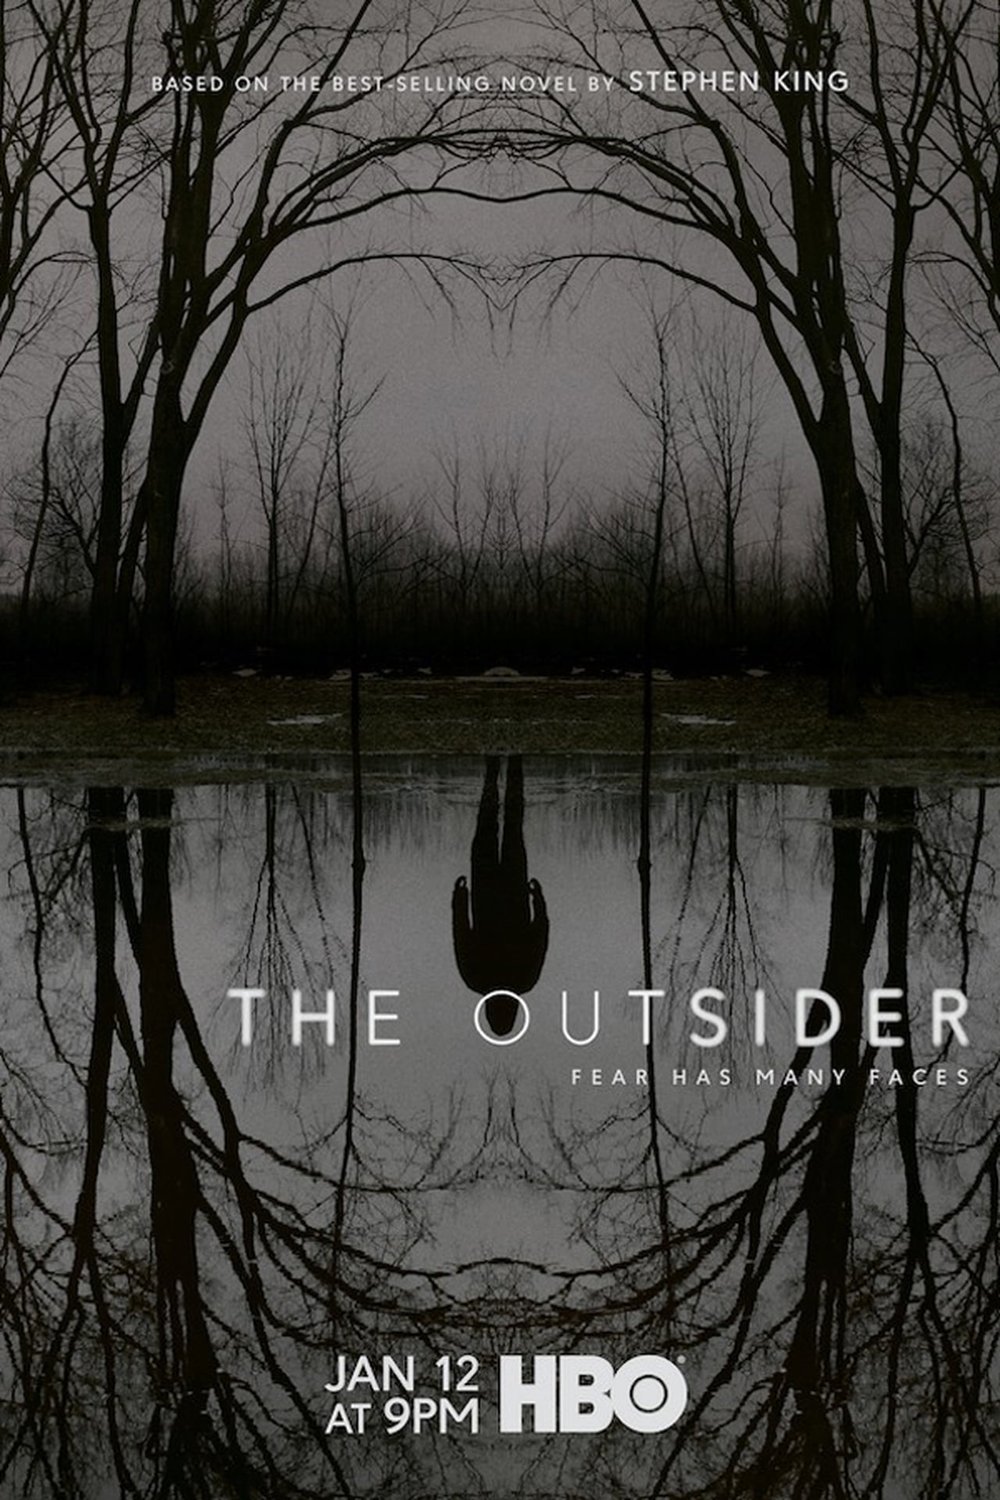 L'affiche du film The Outsider